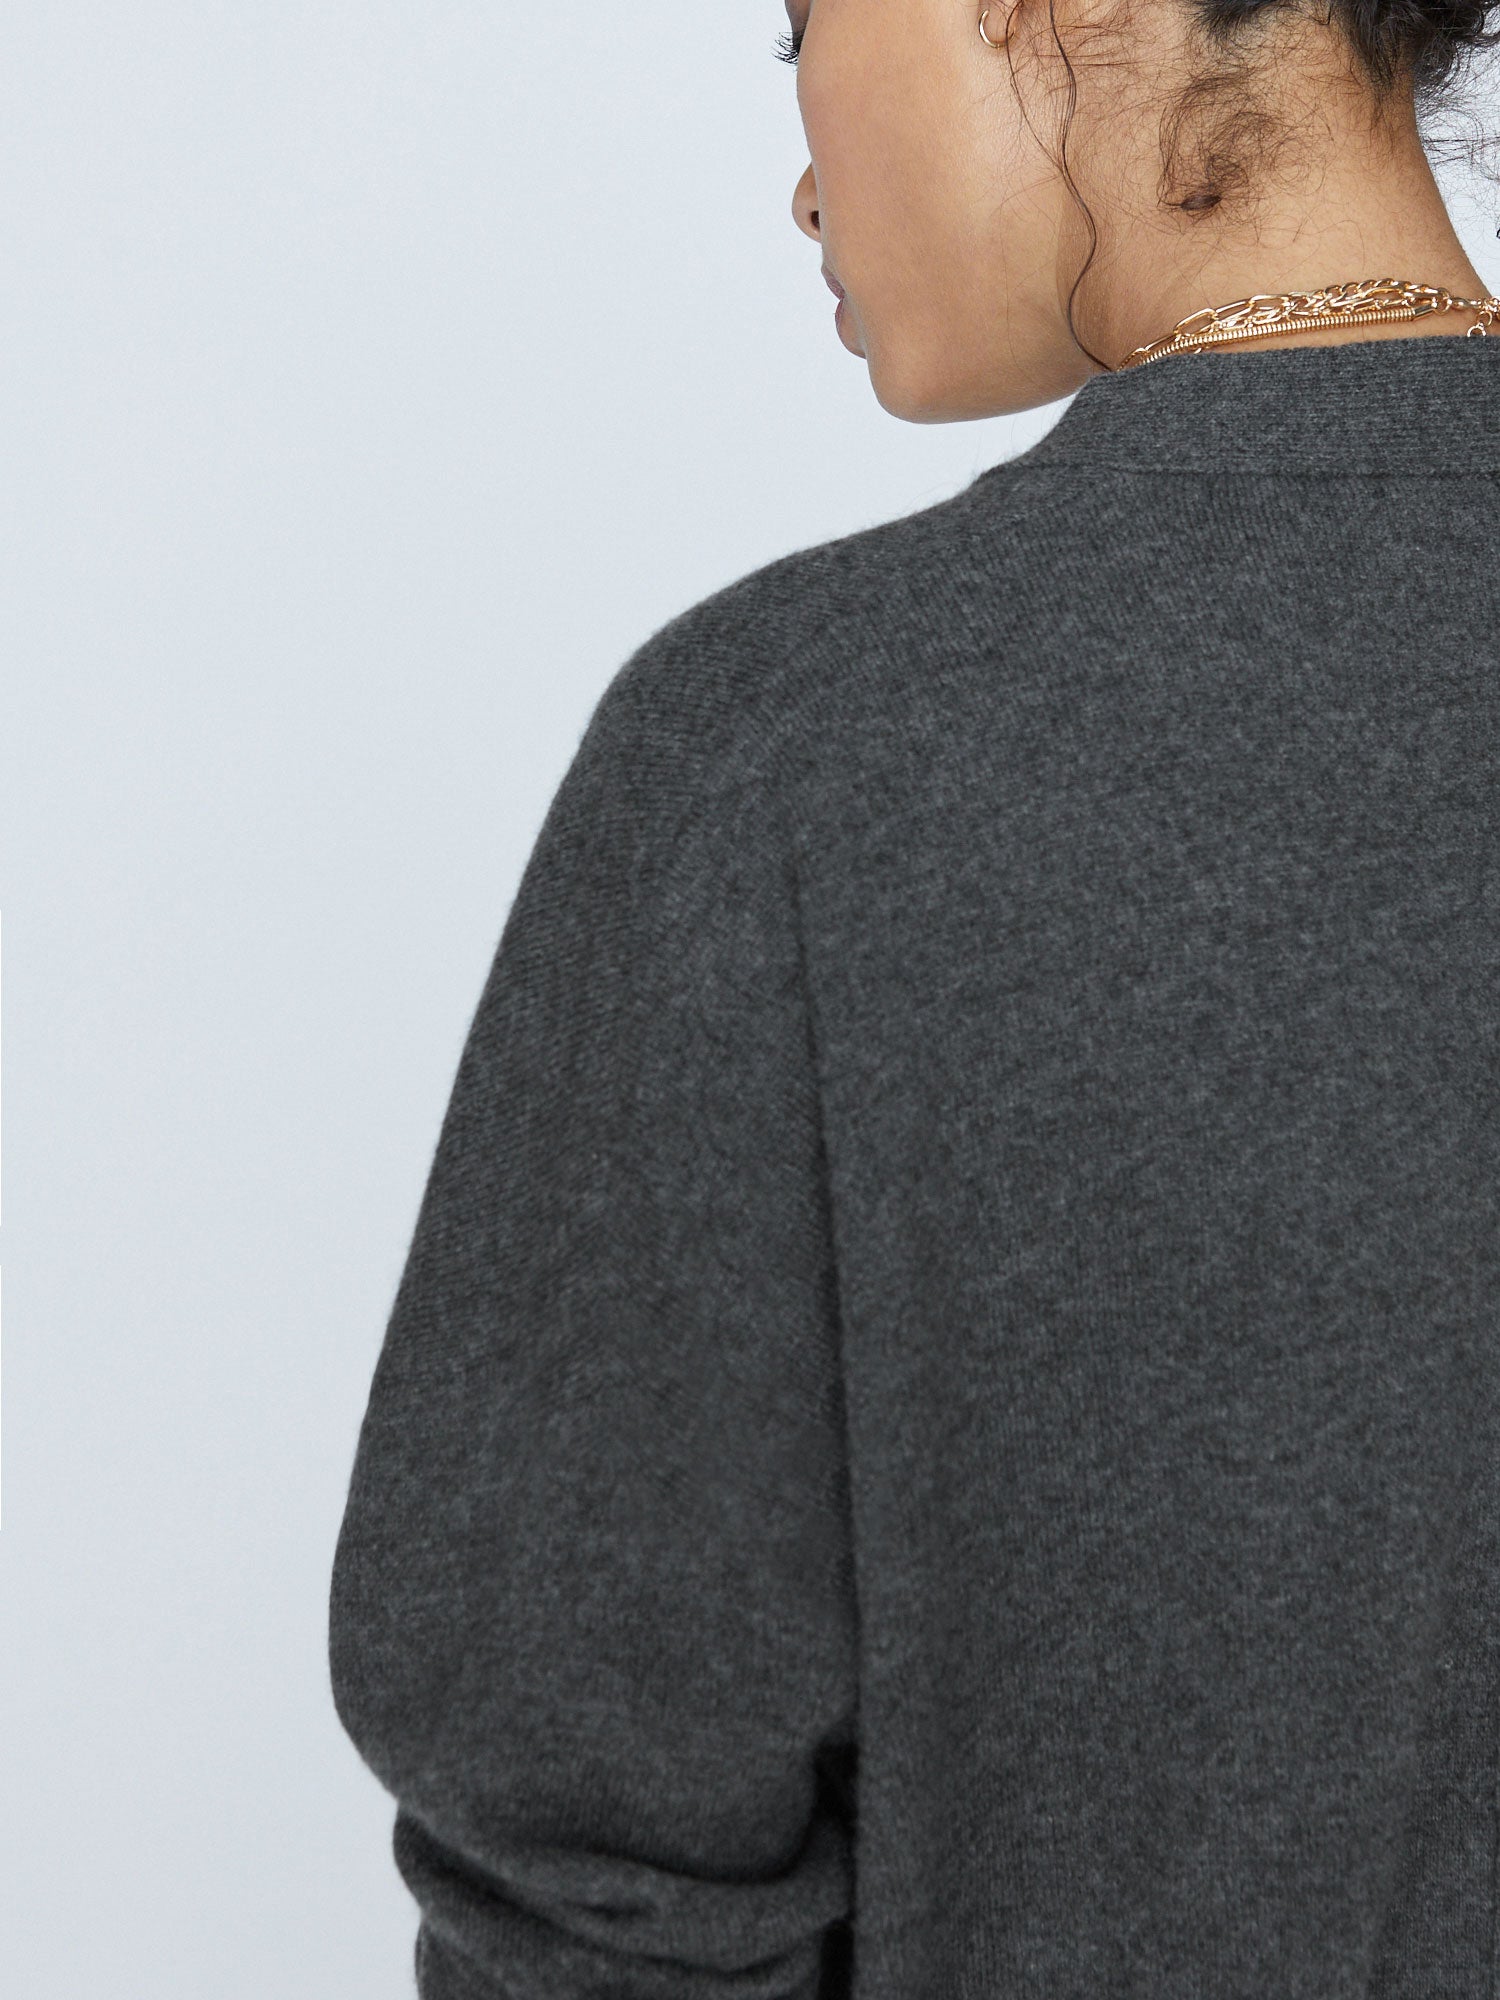 Halo dark grey cashmere wool cardigan sweater close up